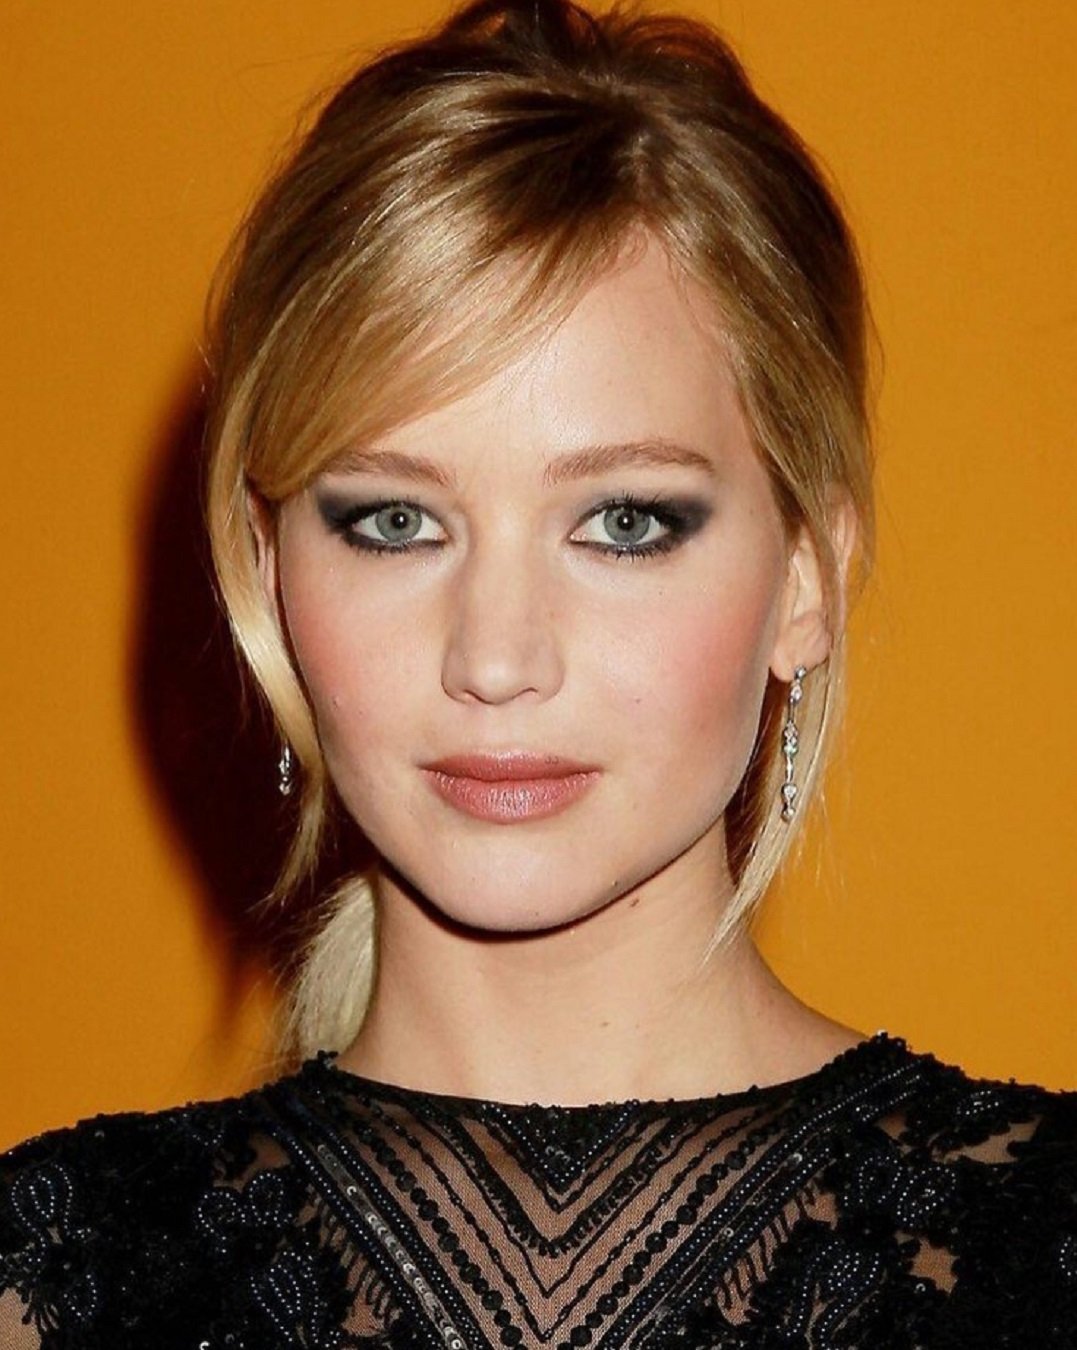 Surt a la llum la duríssima infantesa de Jennifer Lawrence